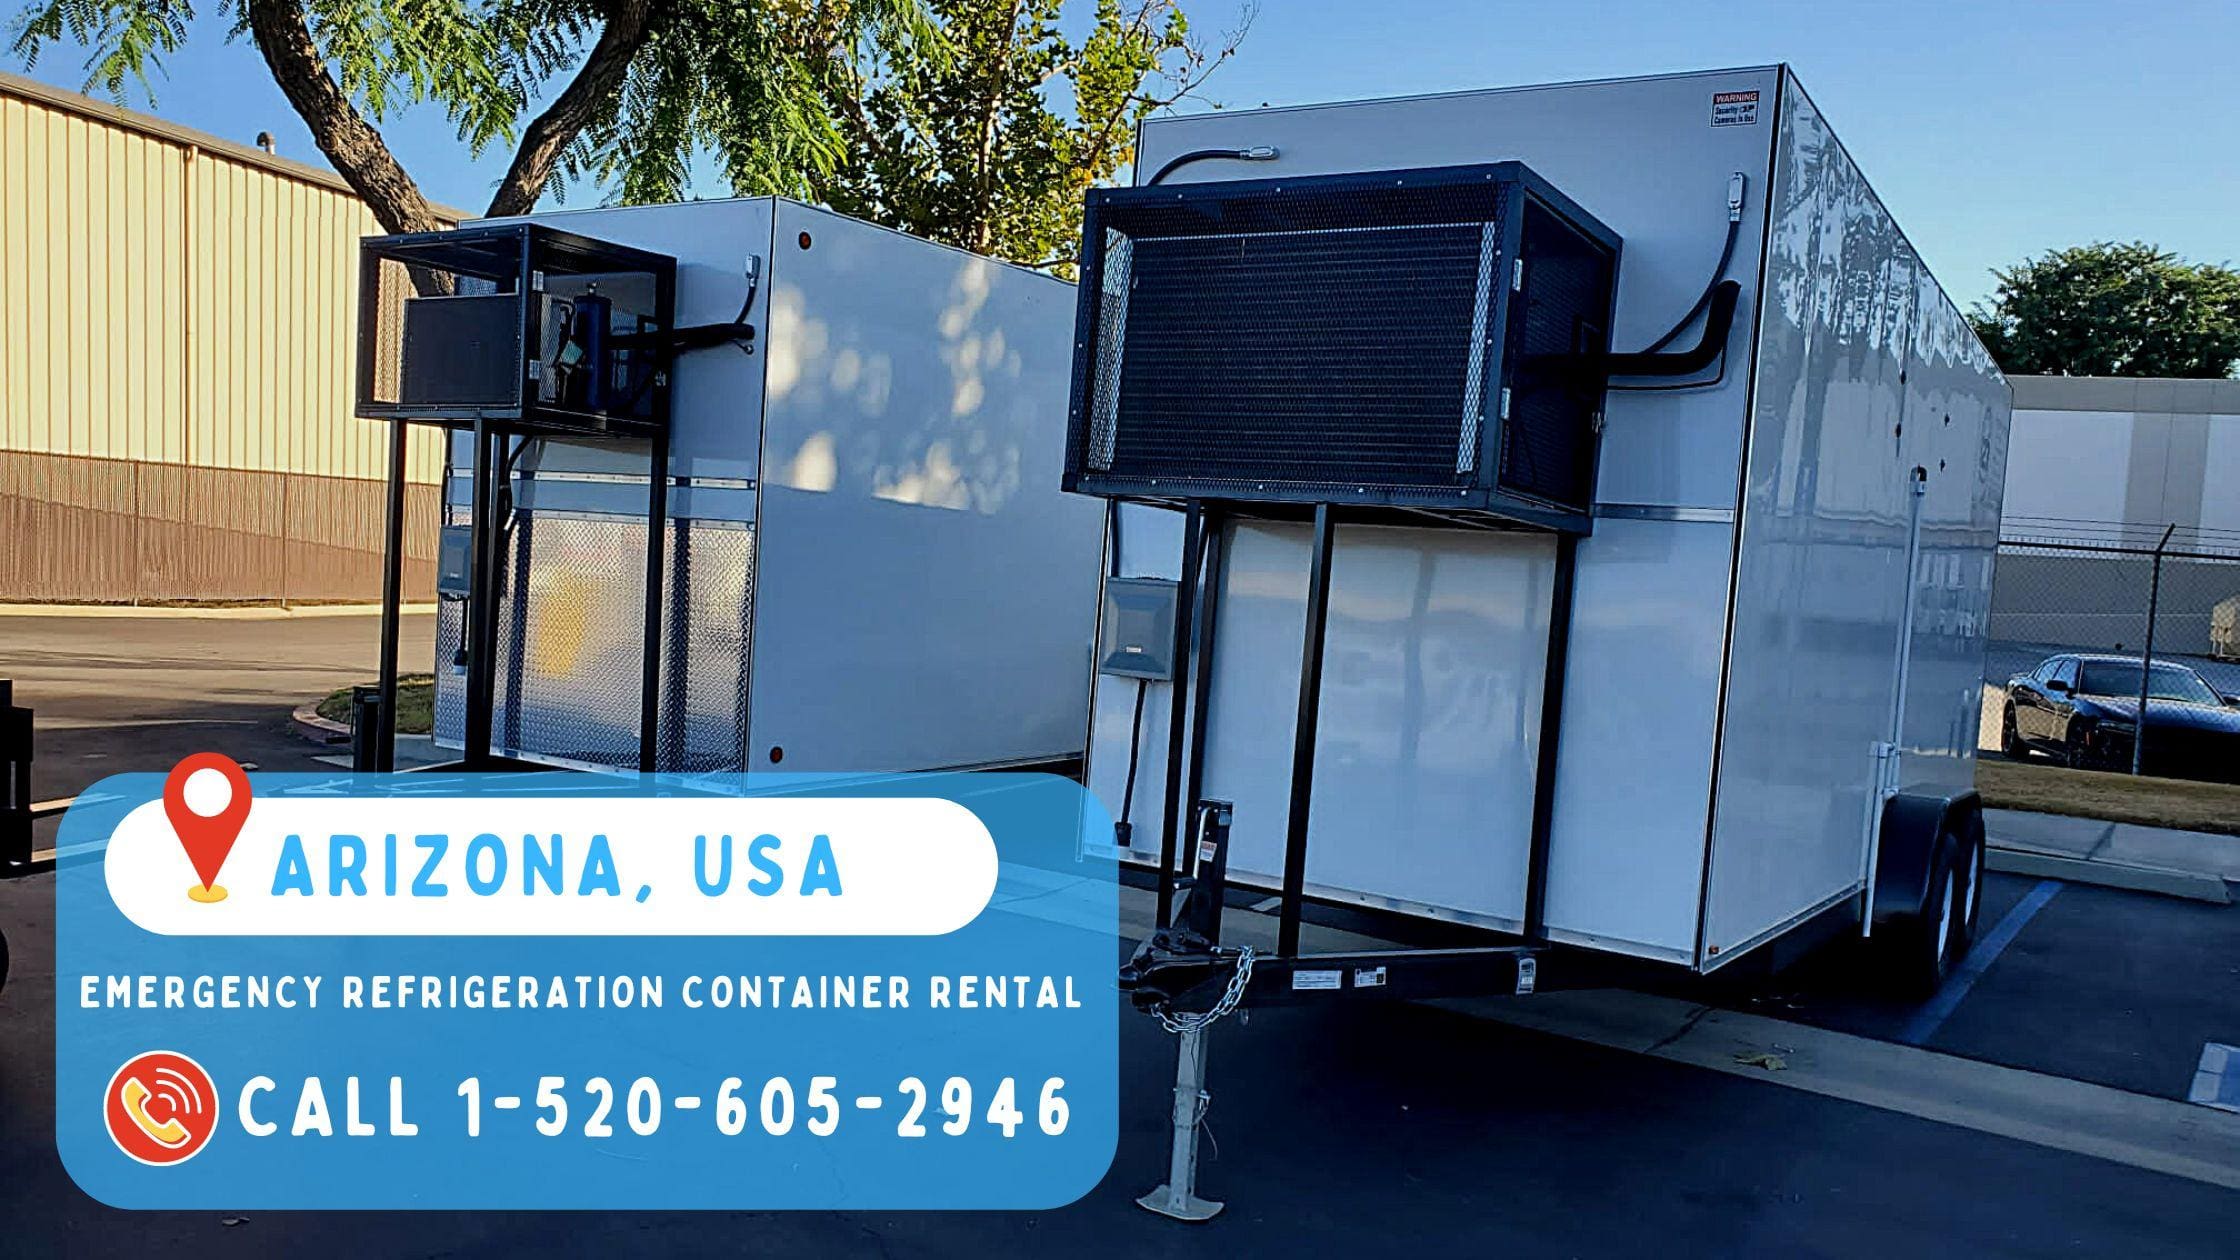 Emergency Refrigeration Container Rental in Arizona